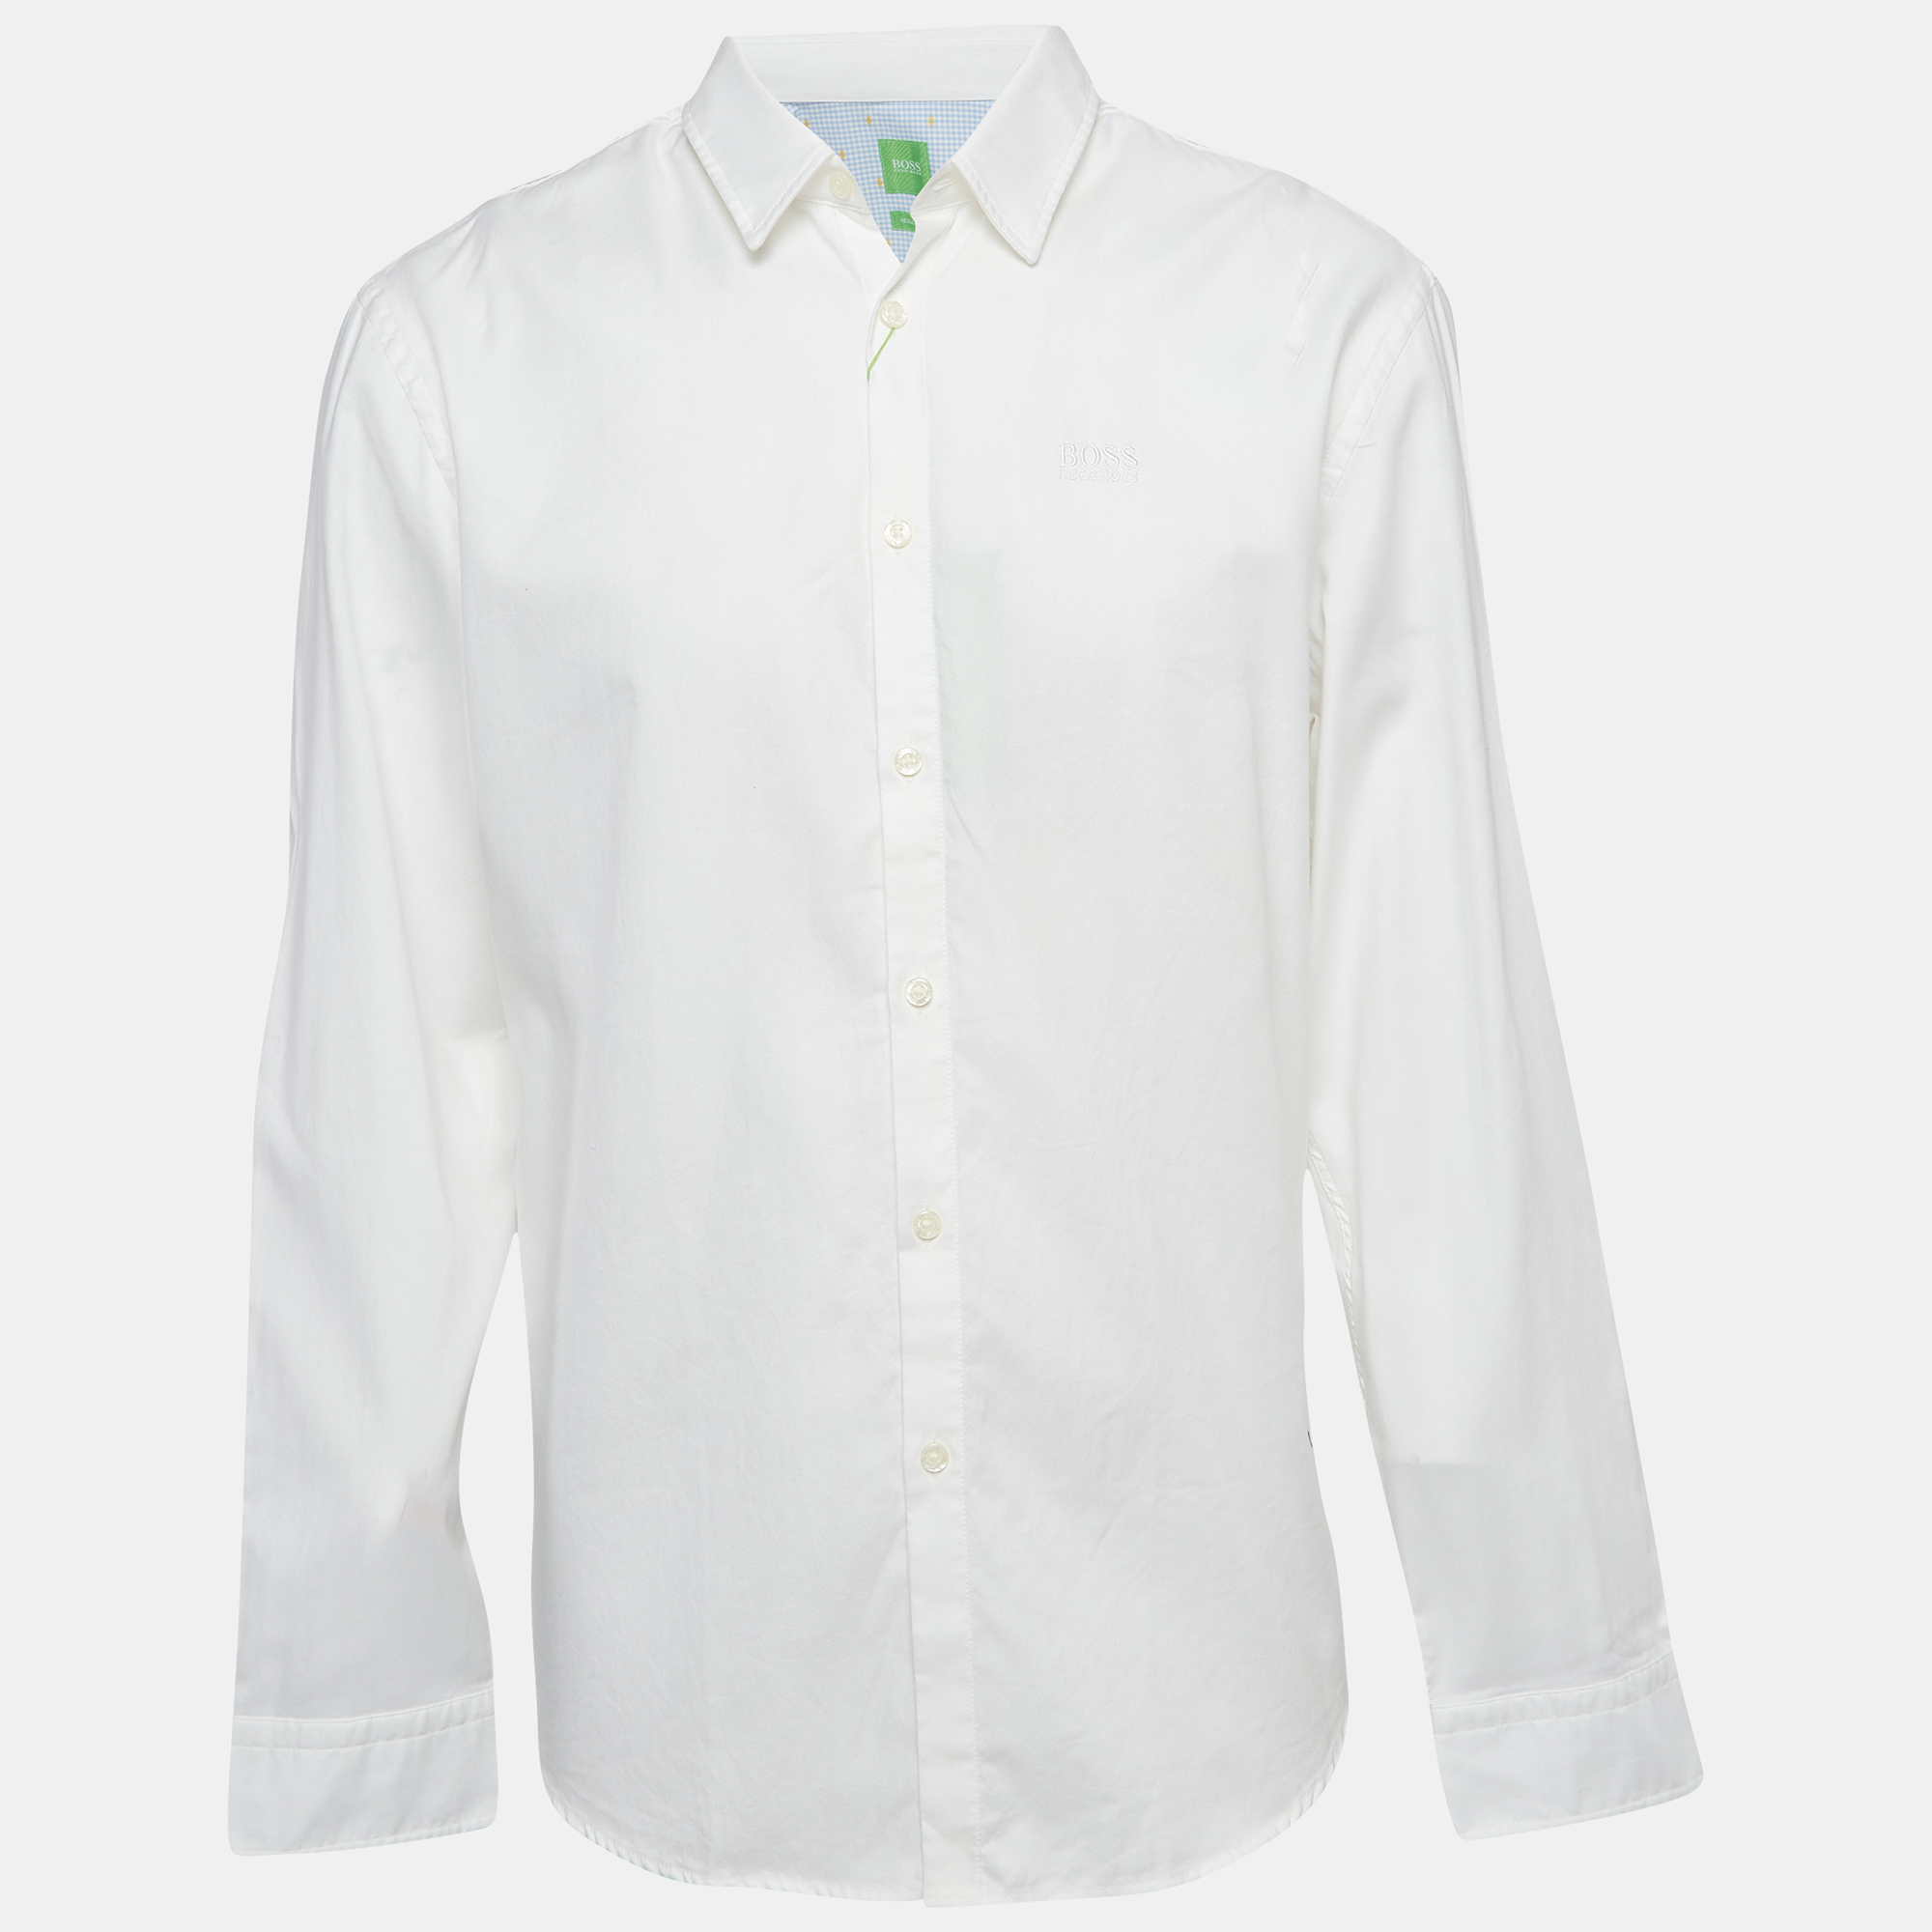 Boss by hugo boss white logo embroidered cotton regular fit shirt xxl